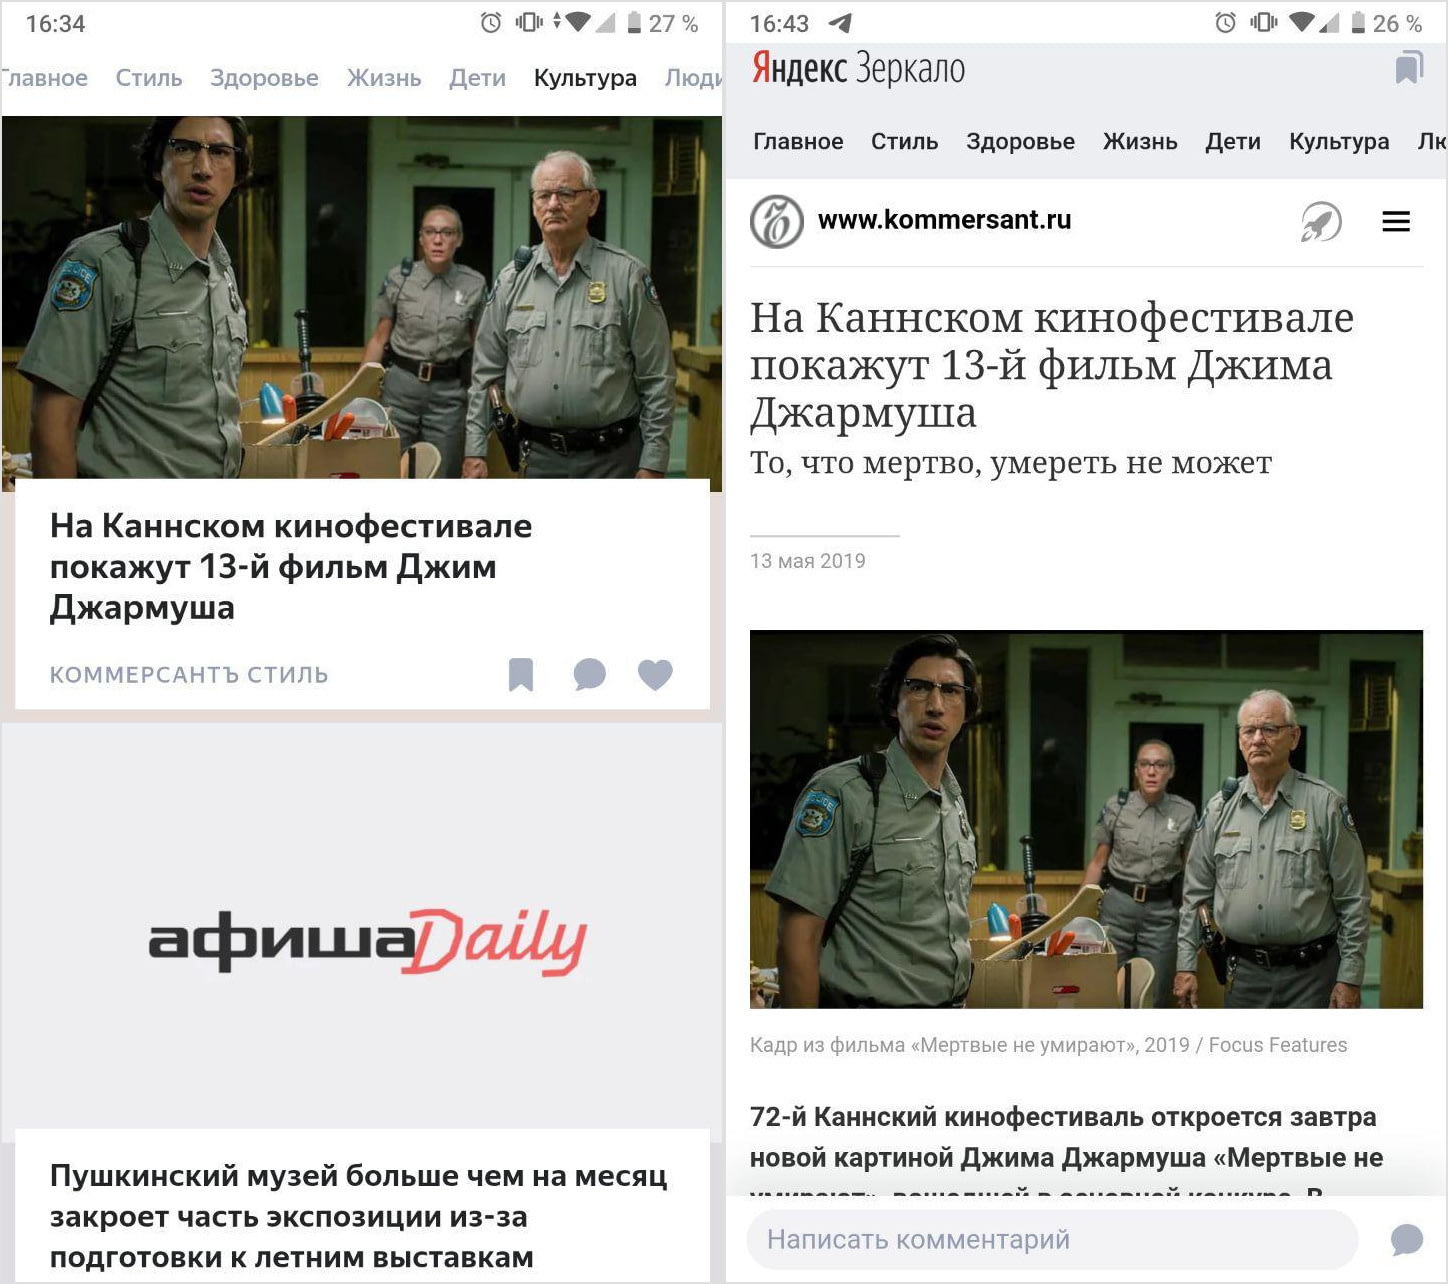 Яндекс тестирует агрегатор лайфстайл-контента Зеркало в формате Турбо